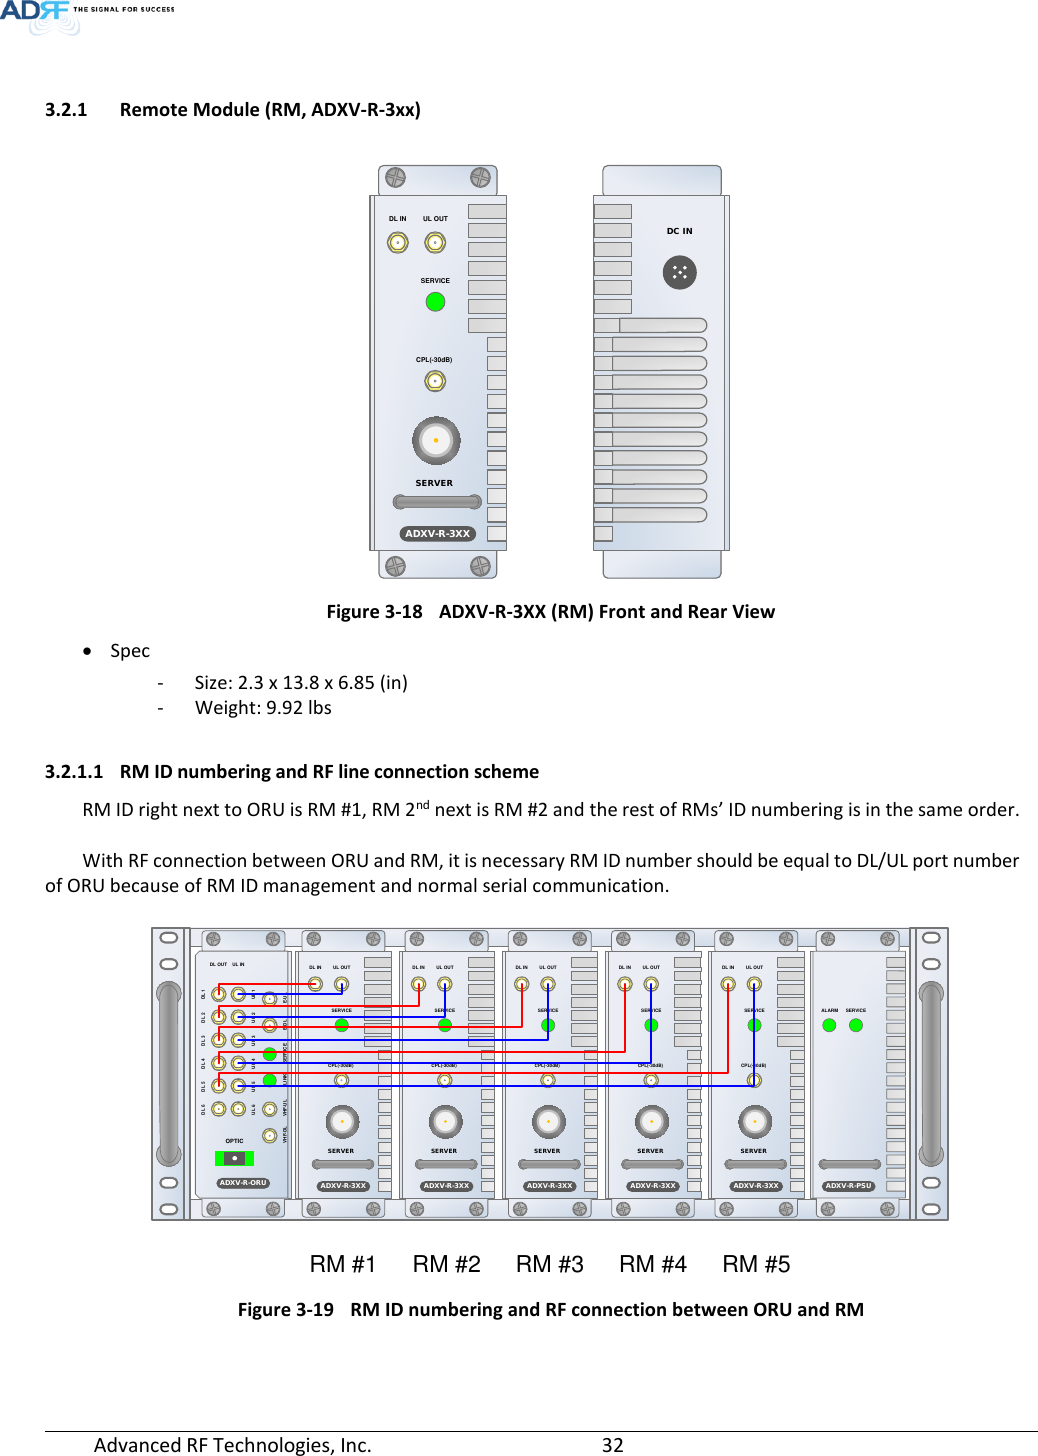 Page 32 of ADRF KOREA ADXV-R-78P-NA DAS (Distributed Antenna System) User Manual ADXV DAS